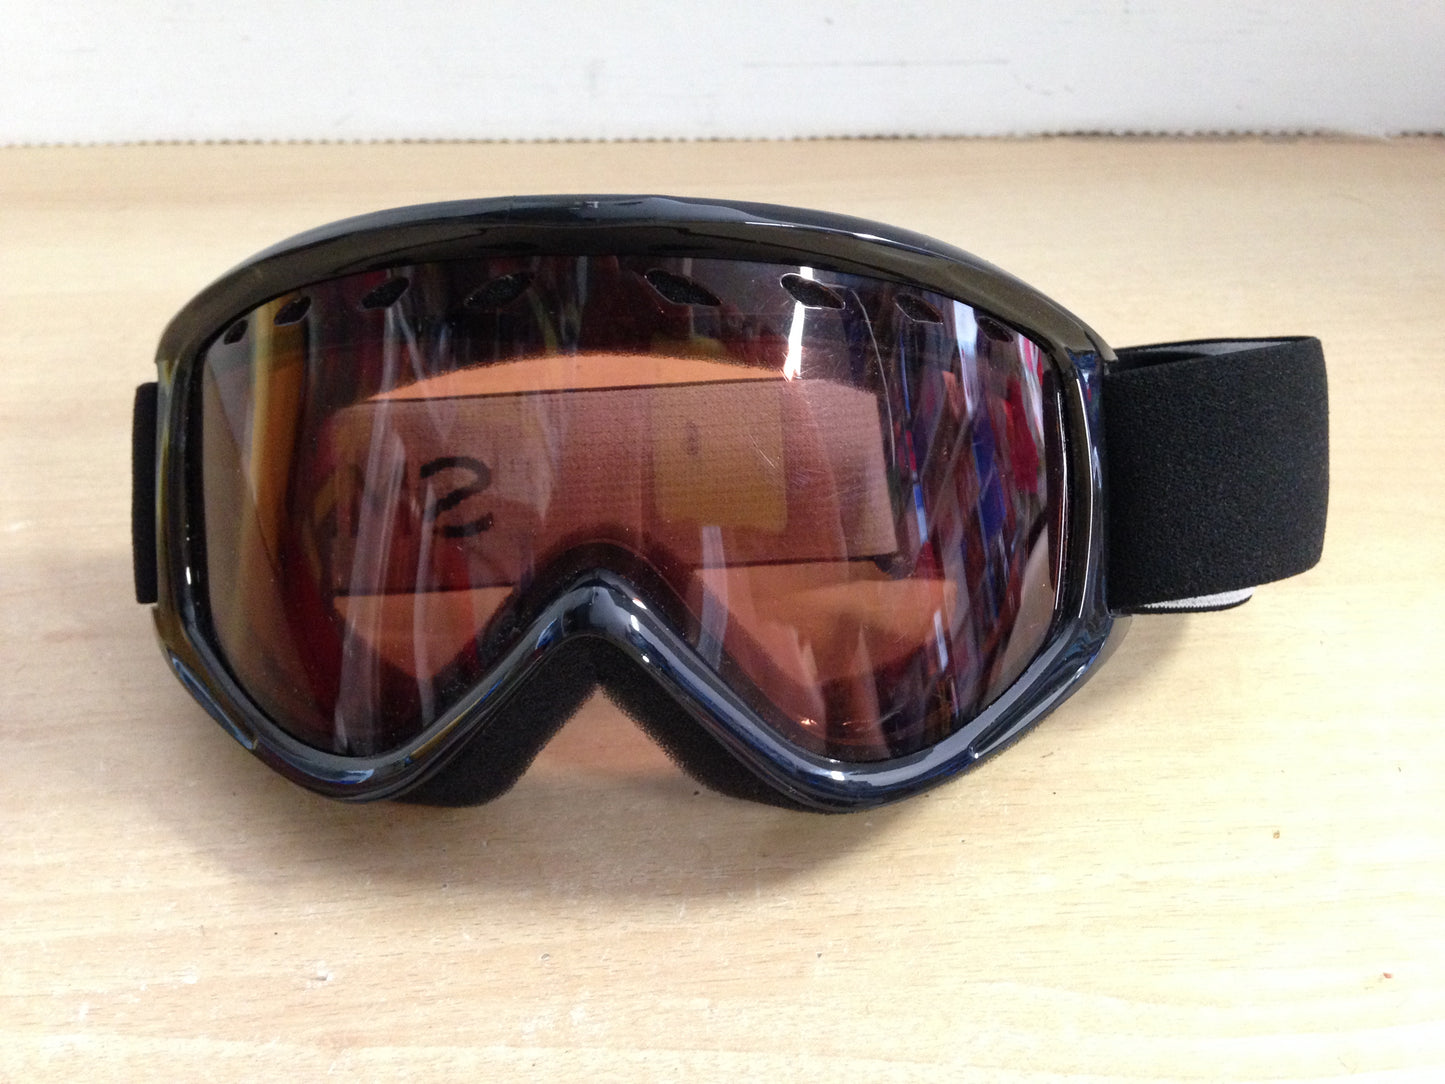 Ski Goggles Adult Size Smith Black White Name New Demo Model